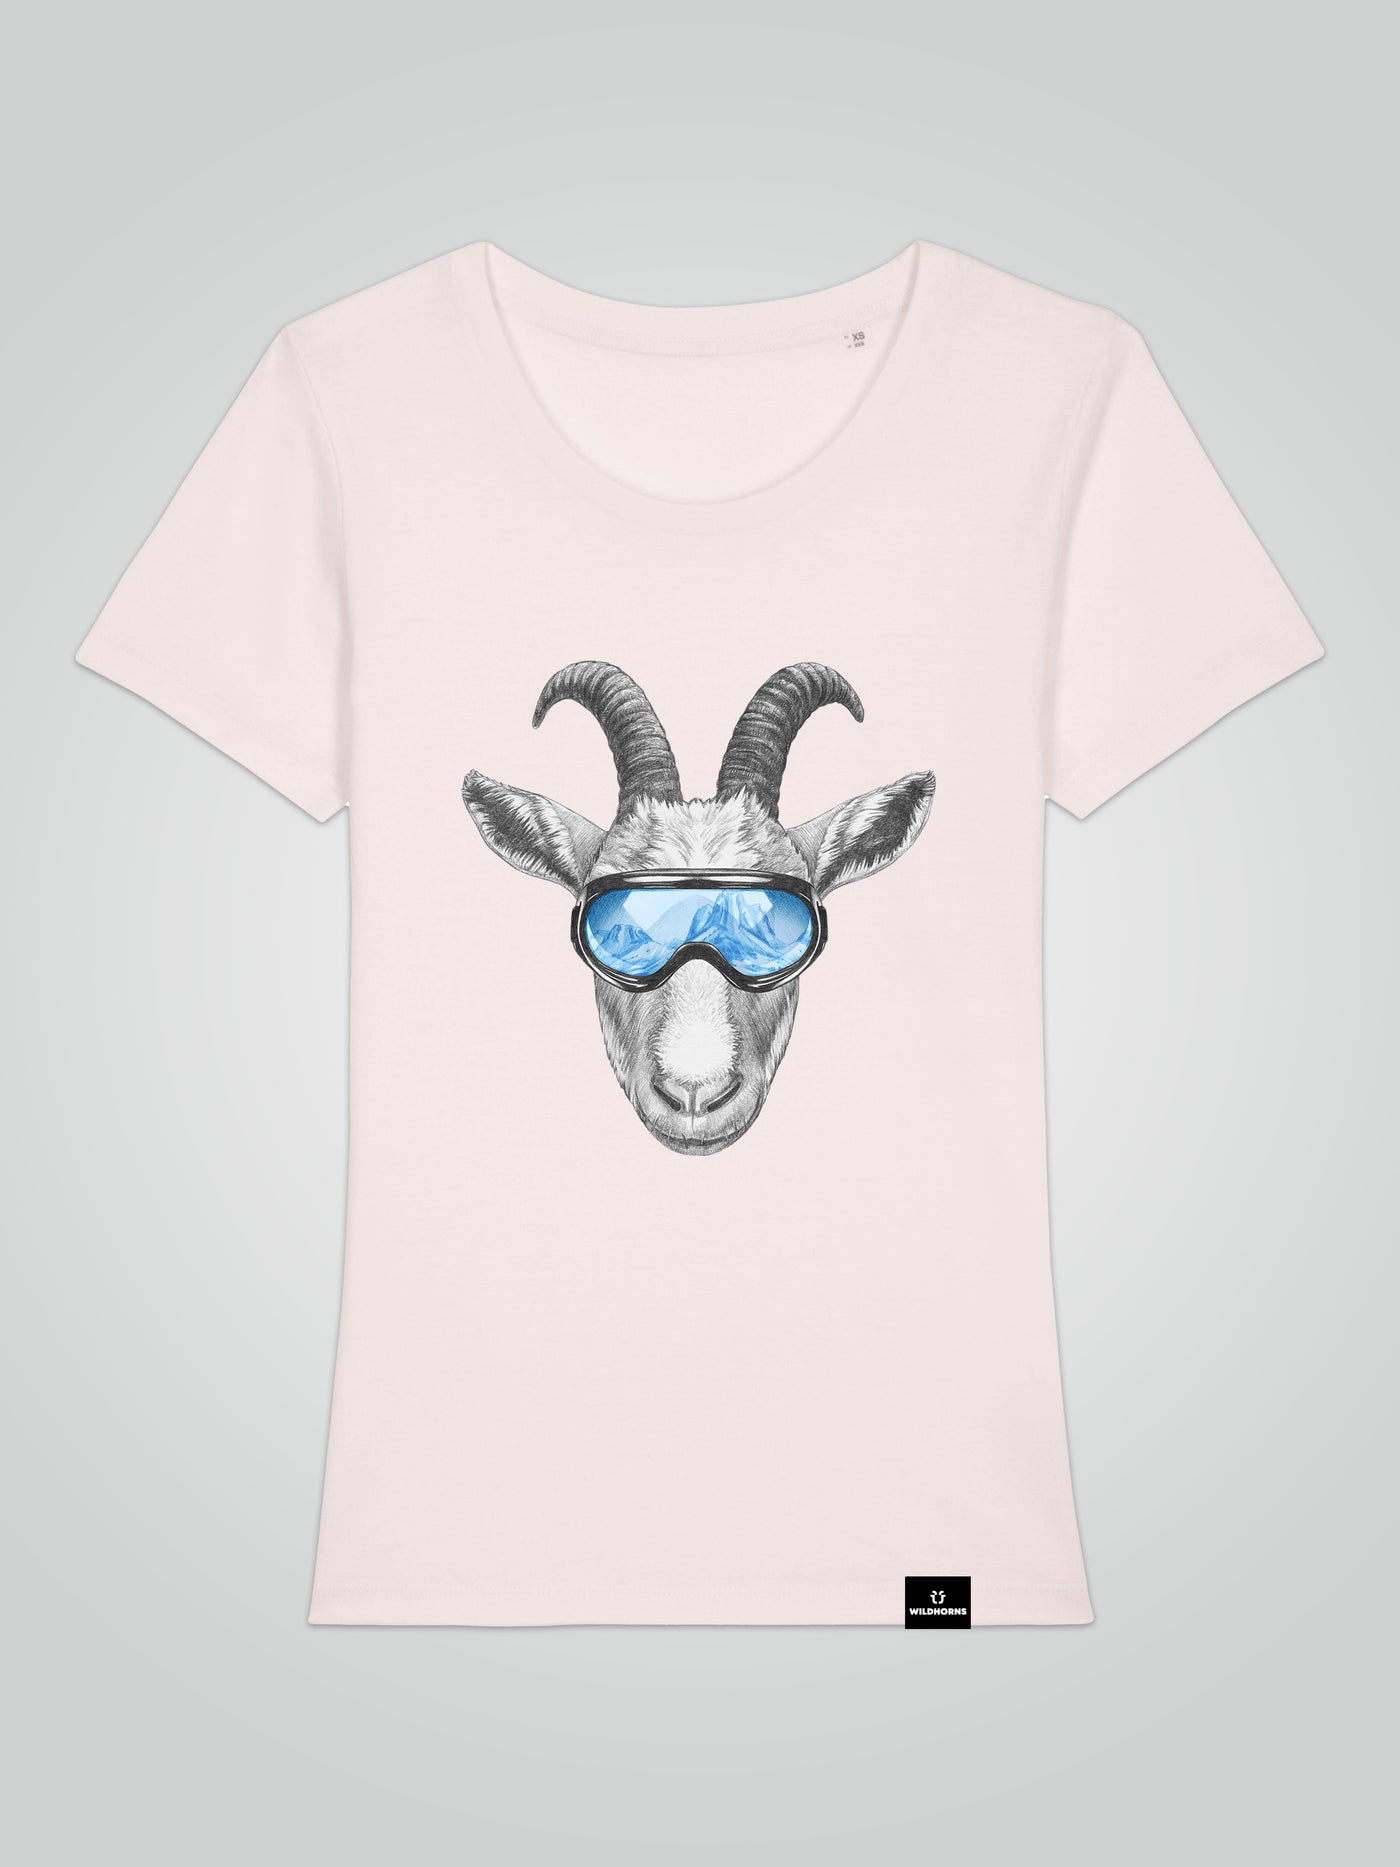 Winter Goat - Women's Fitted T-Shirt